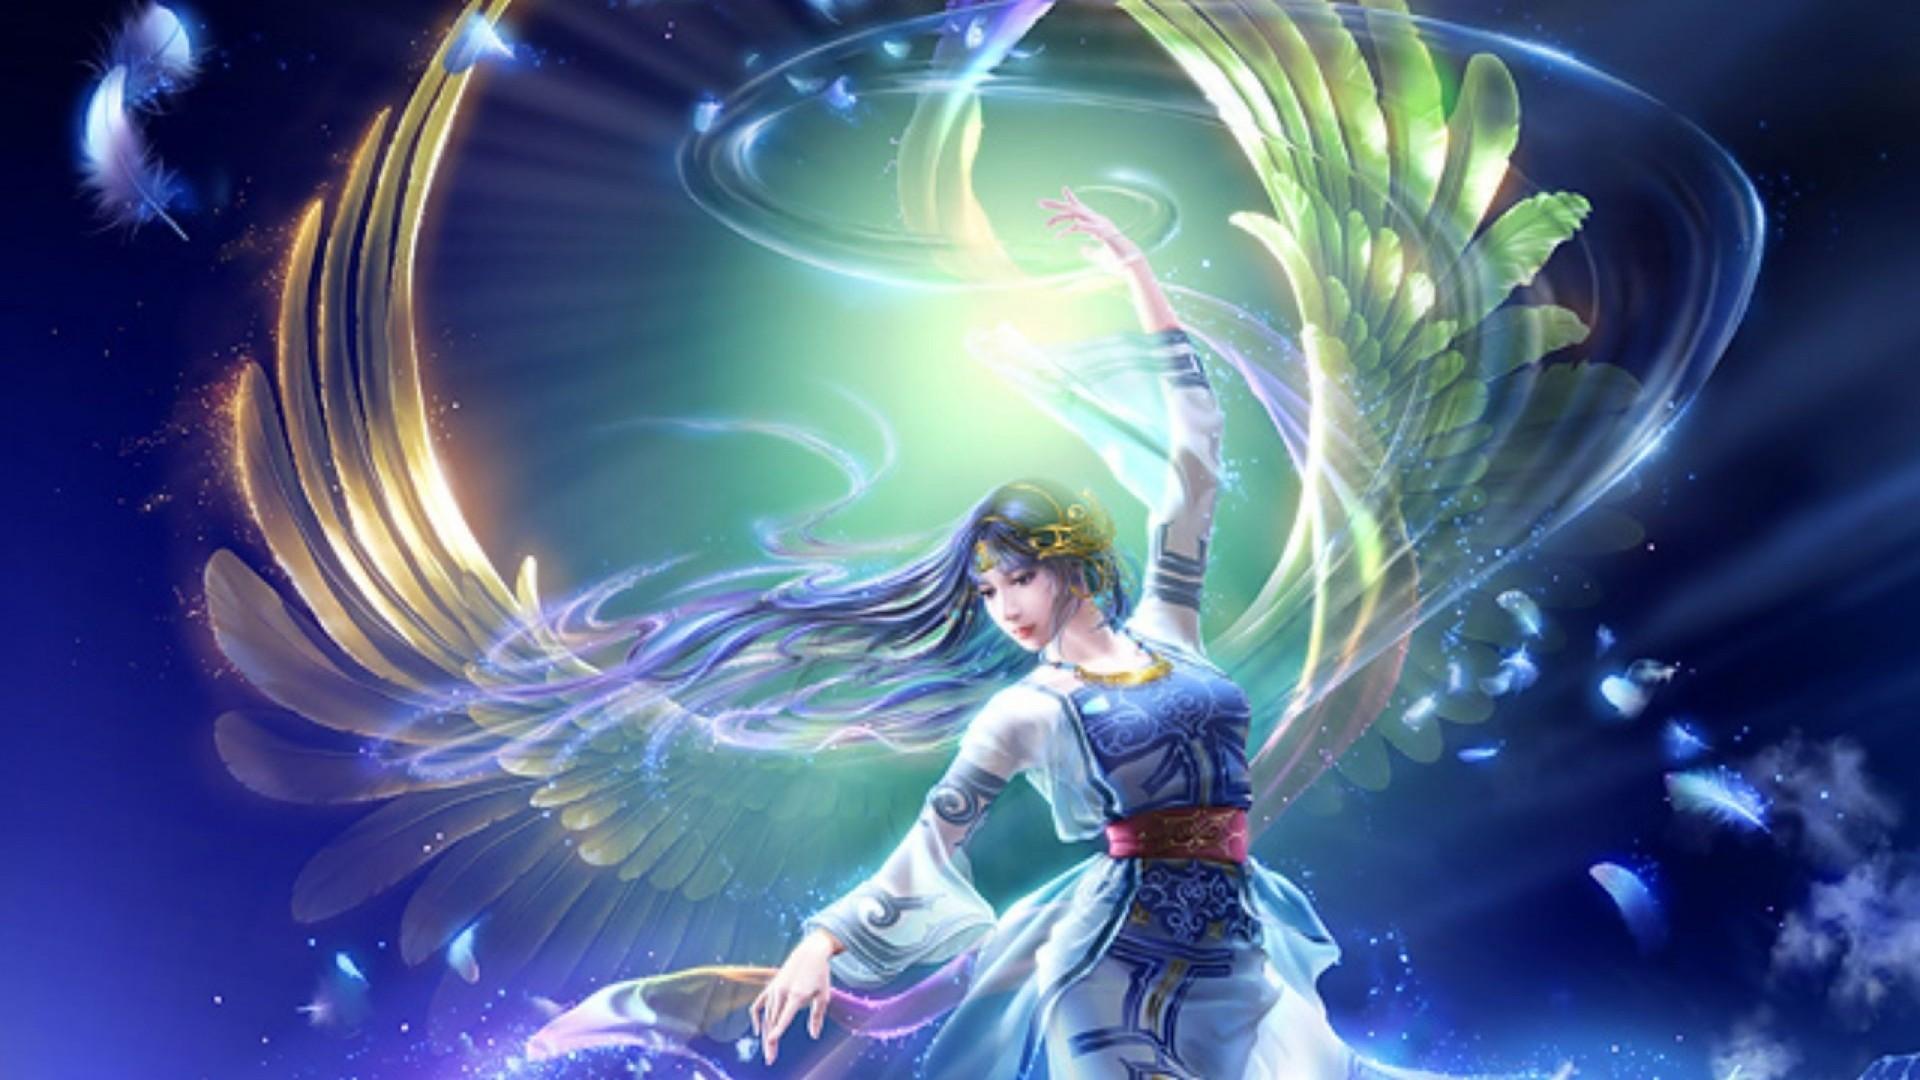 Fantasy Angel Of Light Desktop Background, Wallpaper13.com